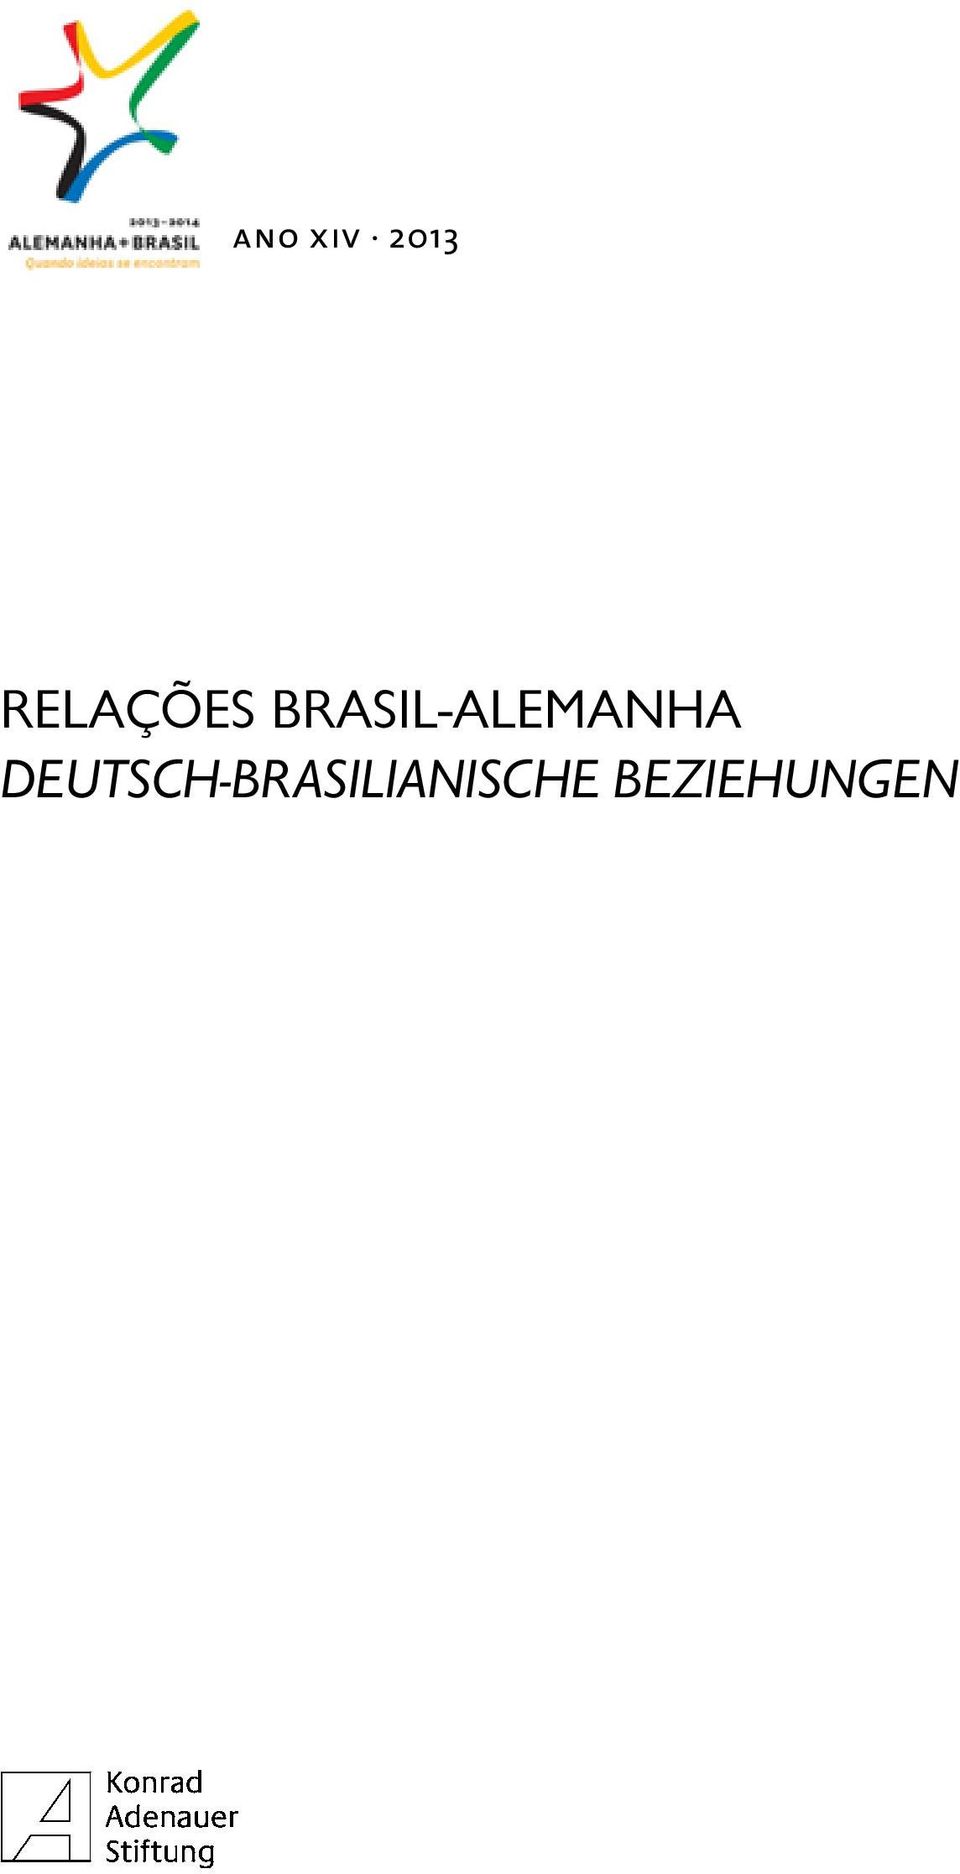 BRASIL-ALEMANHA